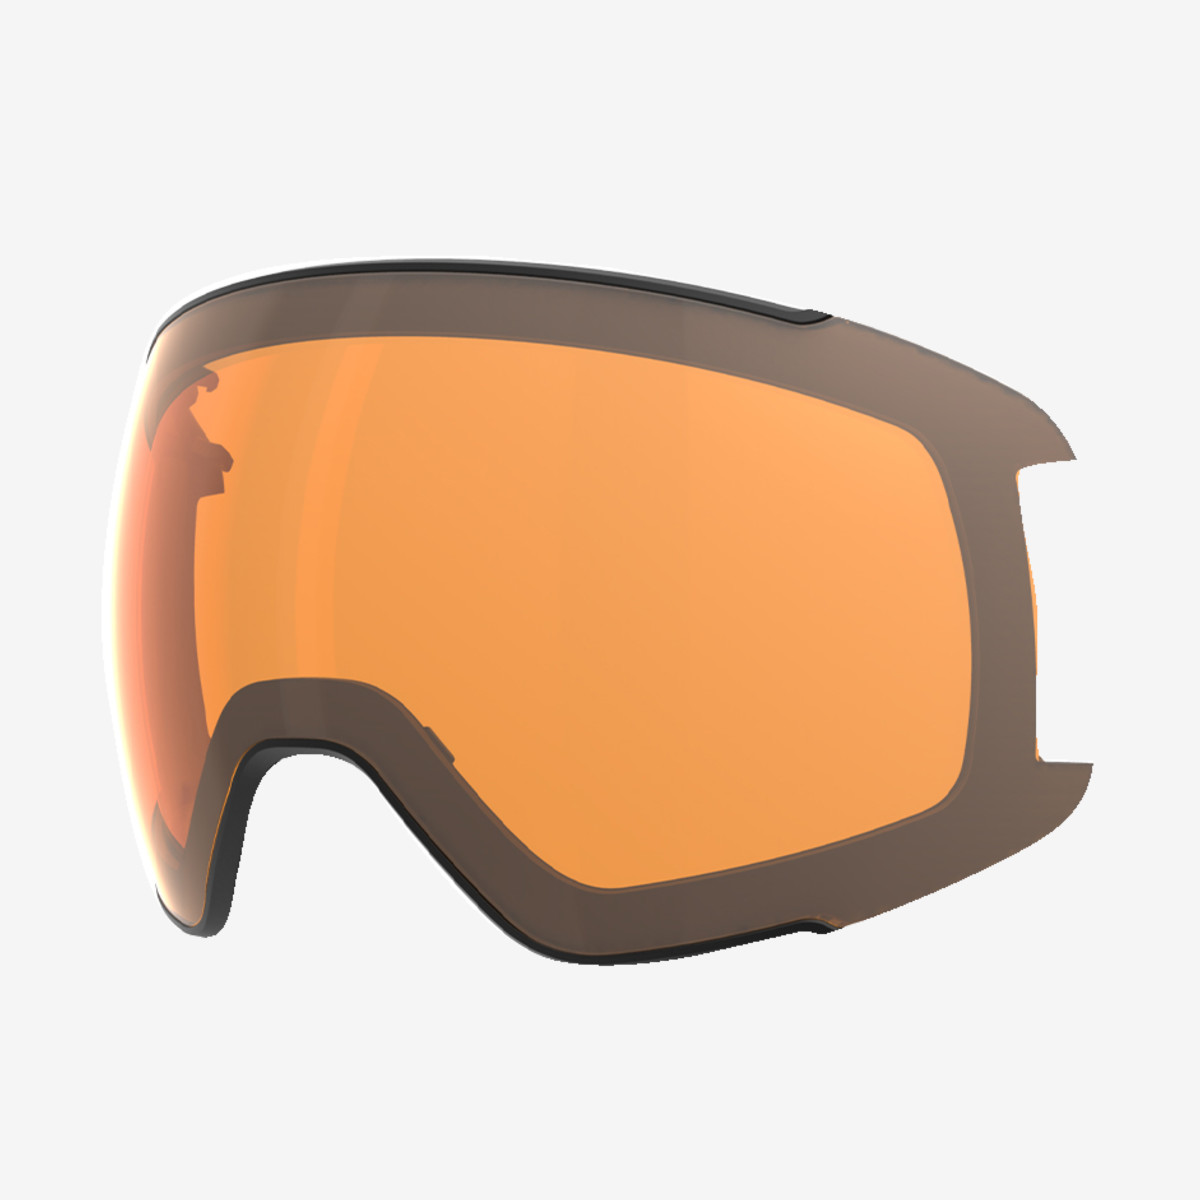  Ski Goggles	 -  head SENTINEL 5K RACE SKI GOGGLE + SL